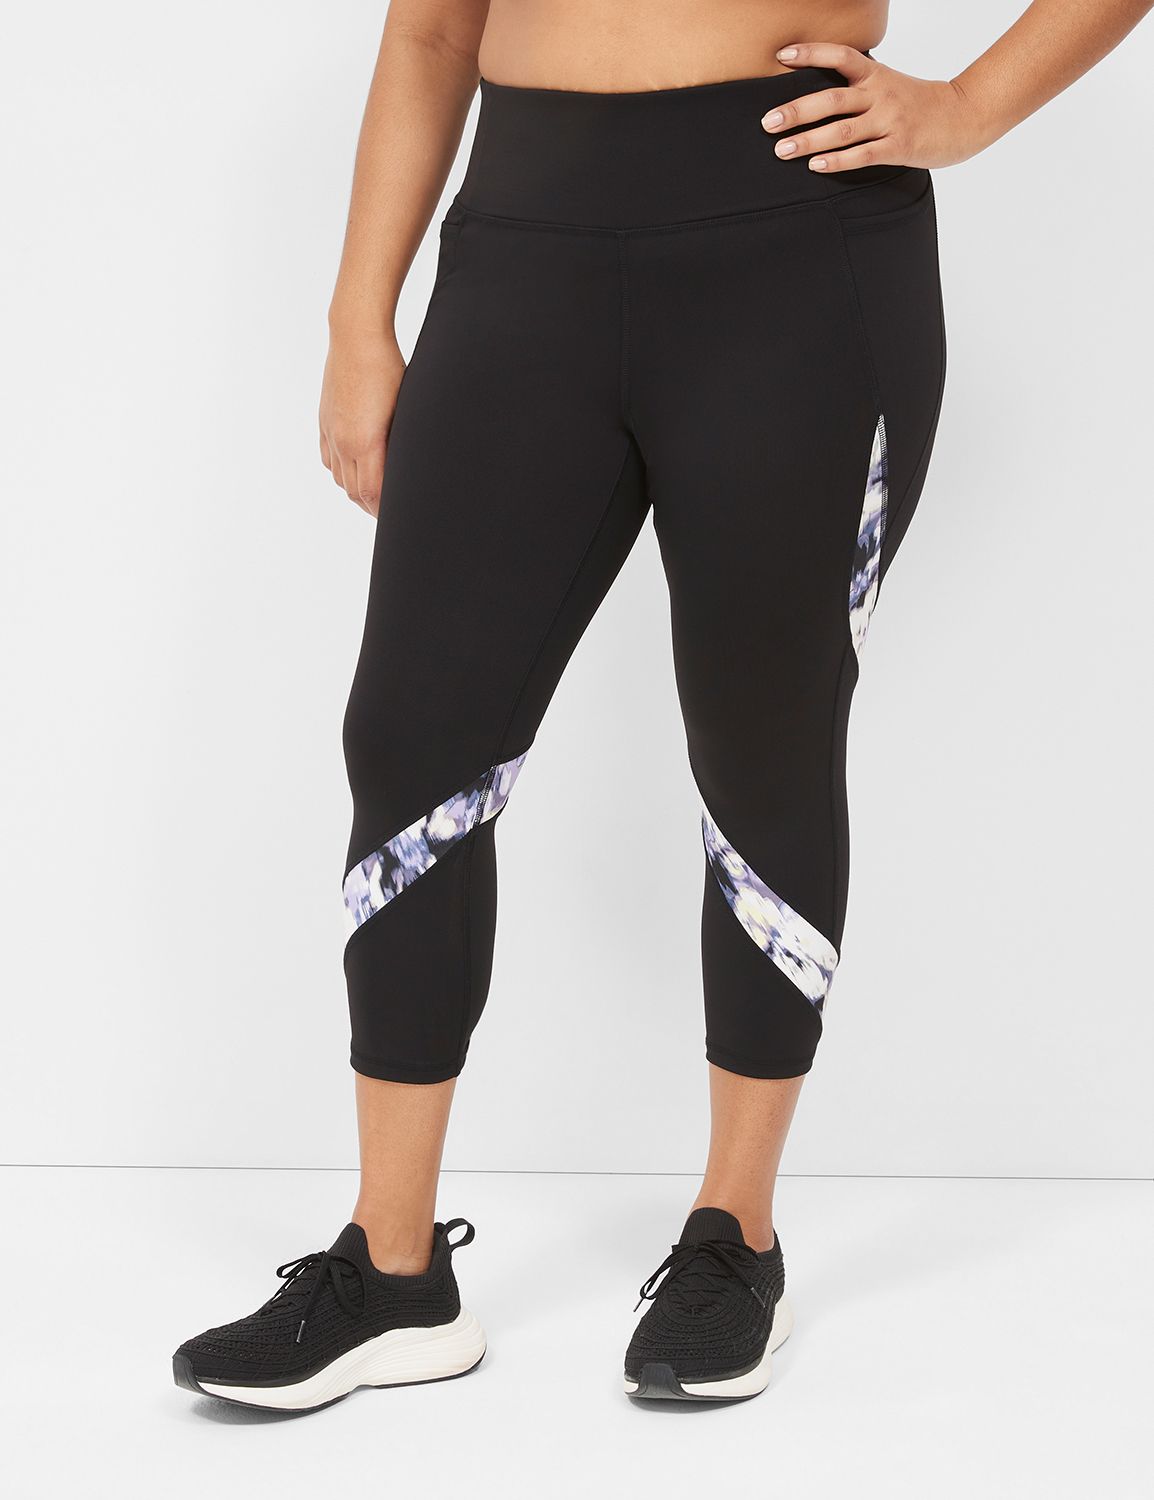 LAVRA Women's Plus Size Printed Stretch Pants Active Leggings-XL-Maze